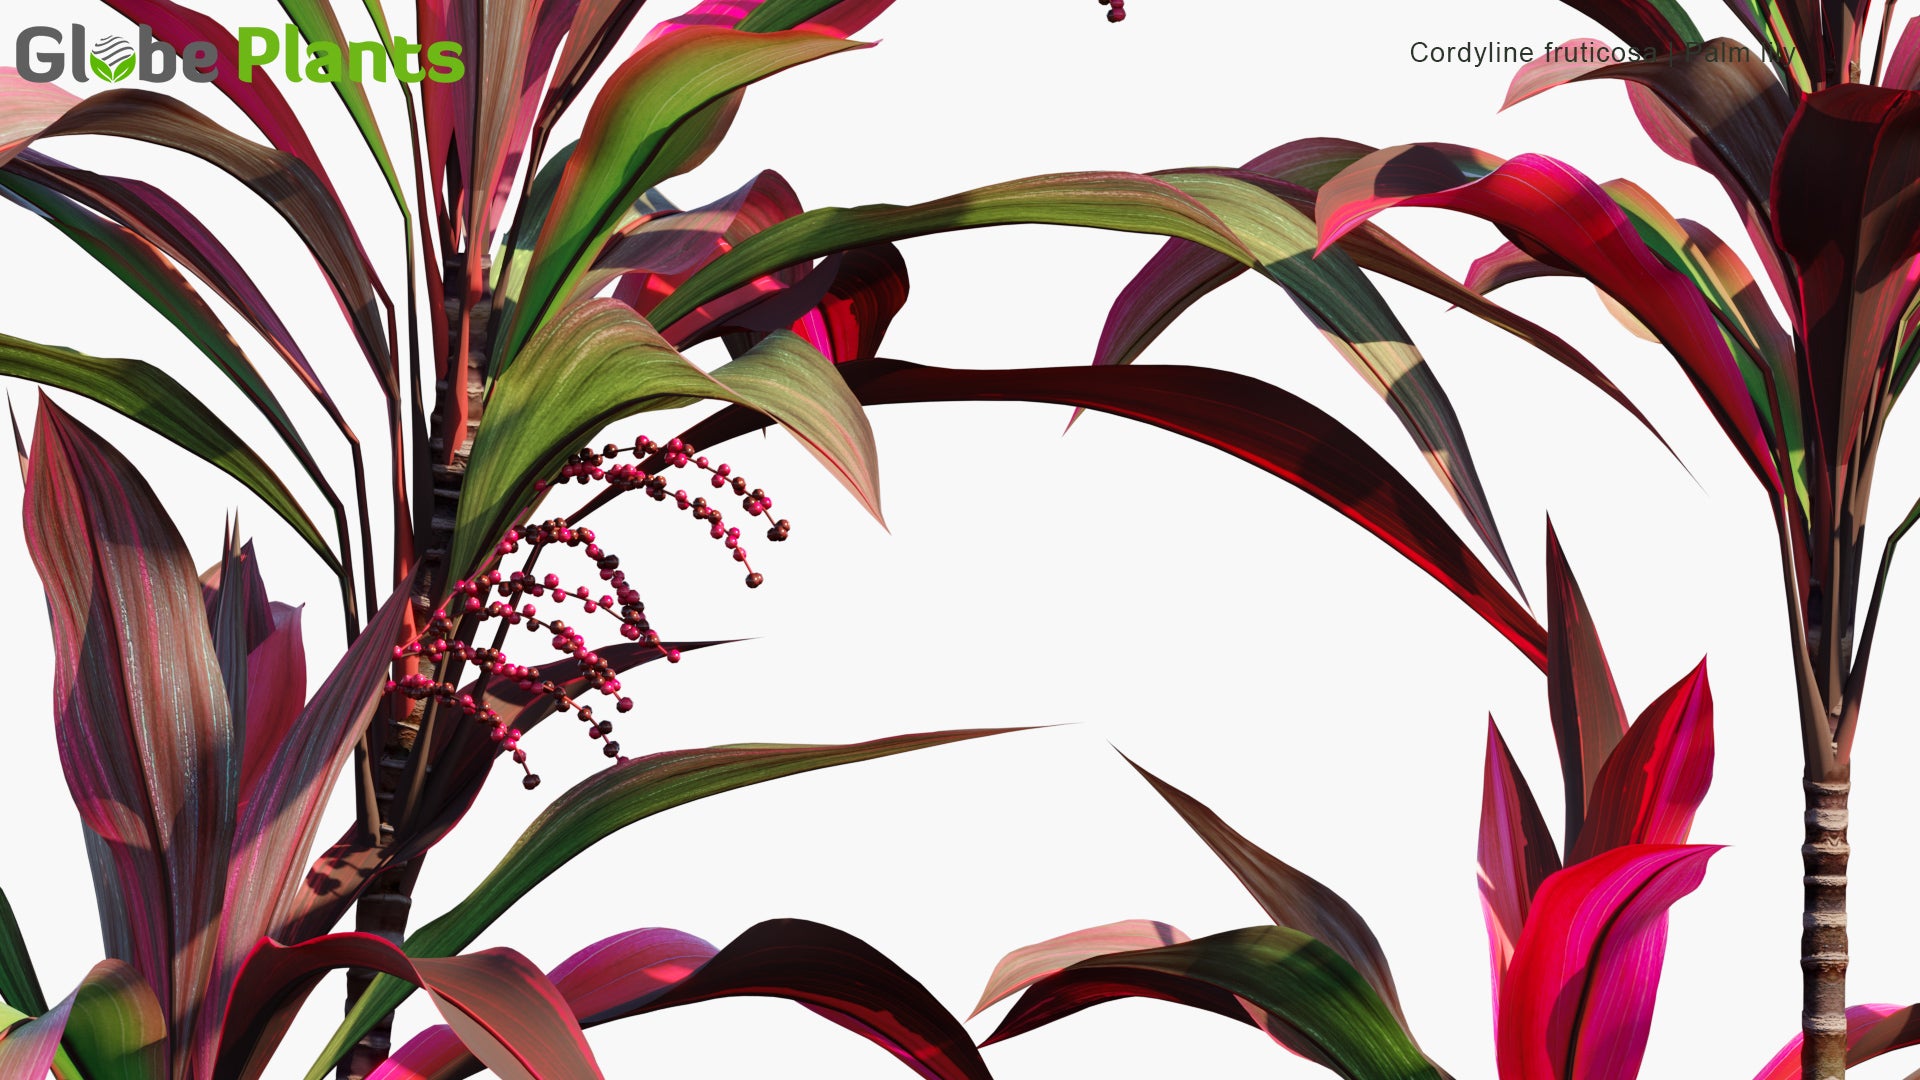 Cordyline Fruticosa - Ti Plant, Palm Lily, Cabbage Palm